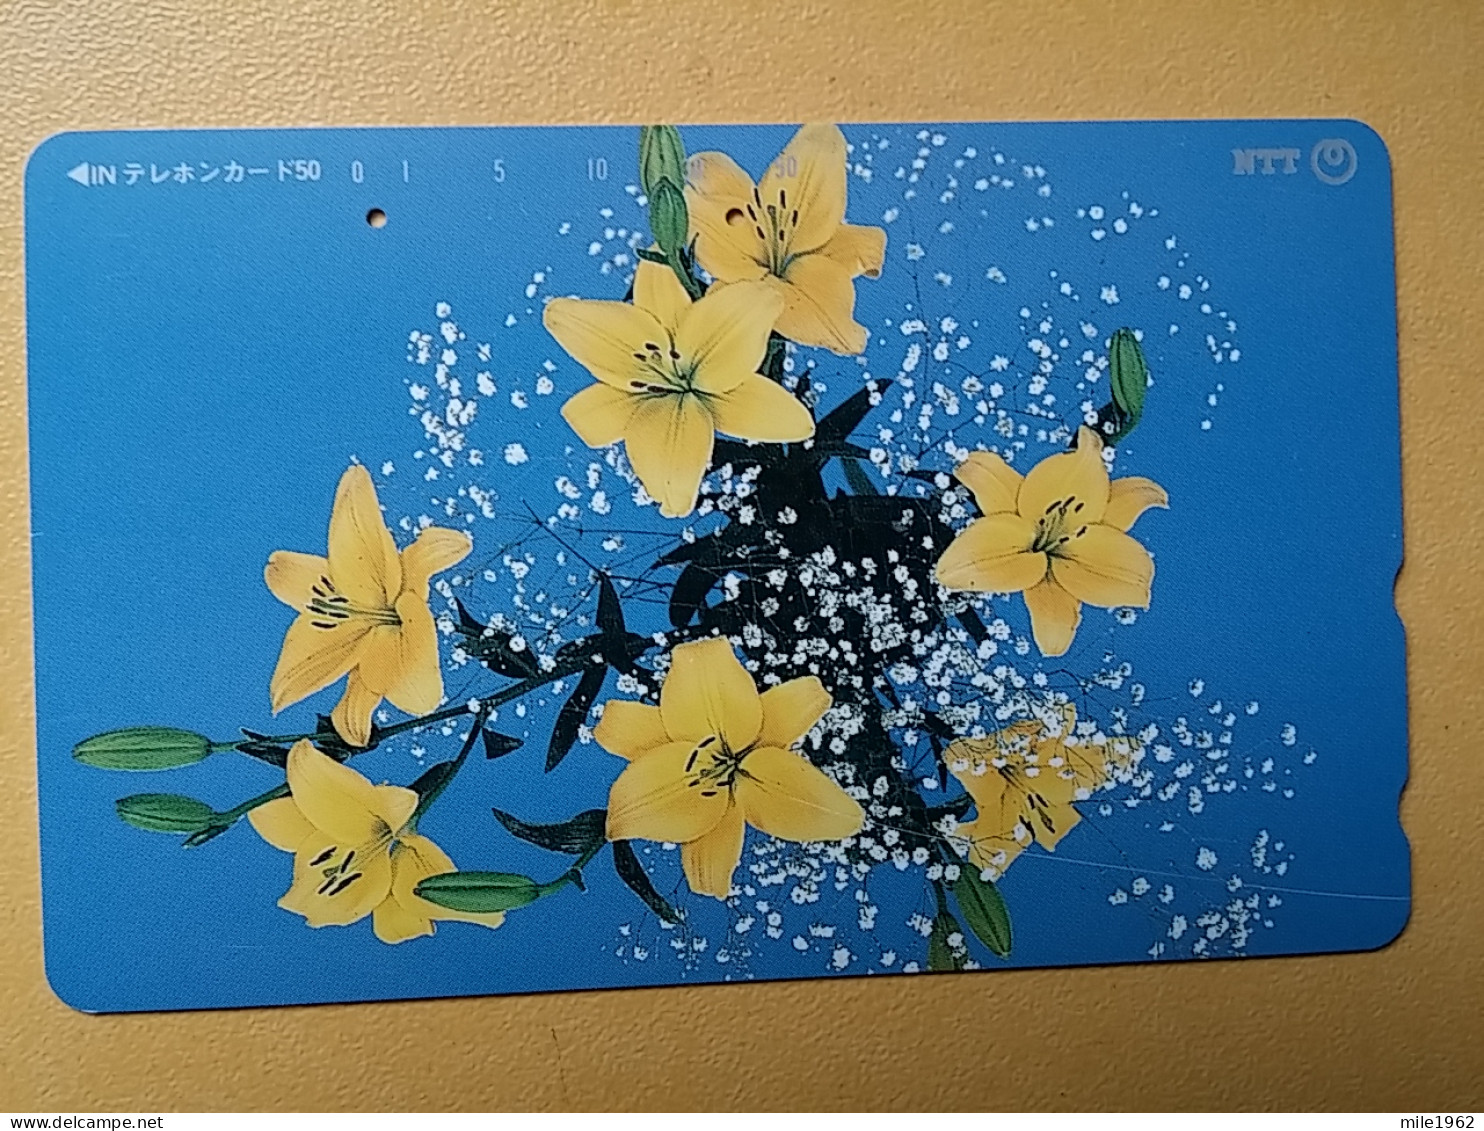 T-384 - JAPAN, Japon, Nipon, TELECARD, PHONECARD, Flower, Fleur, NTT 231-183 - Fiori